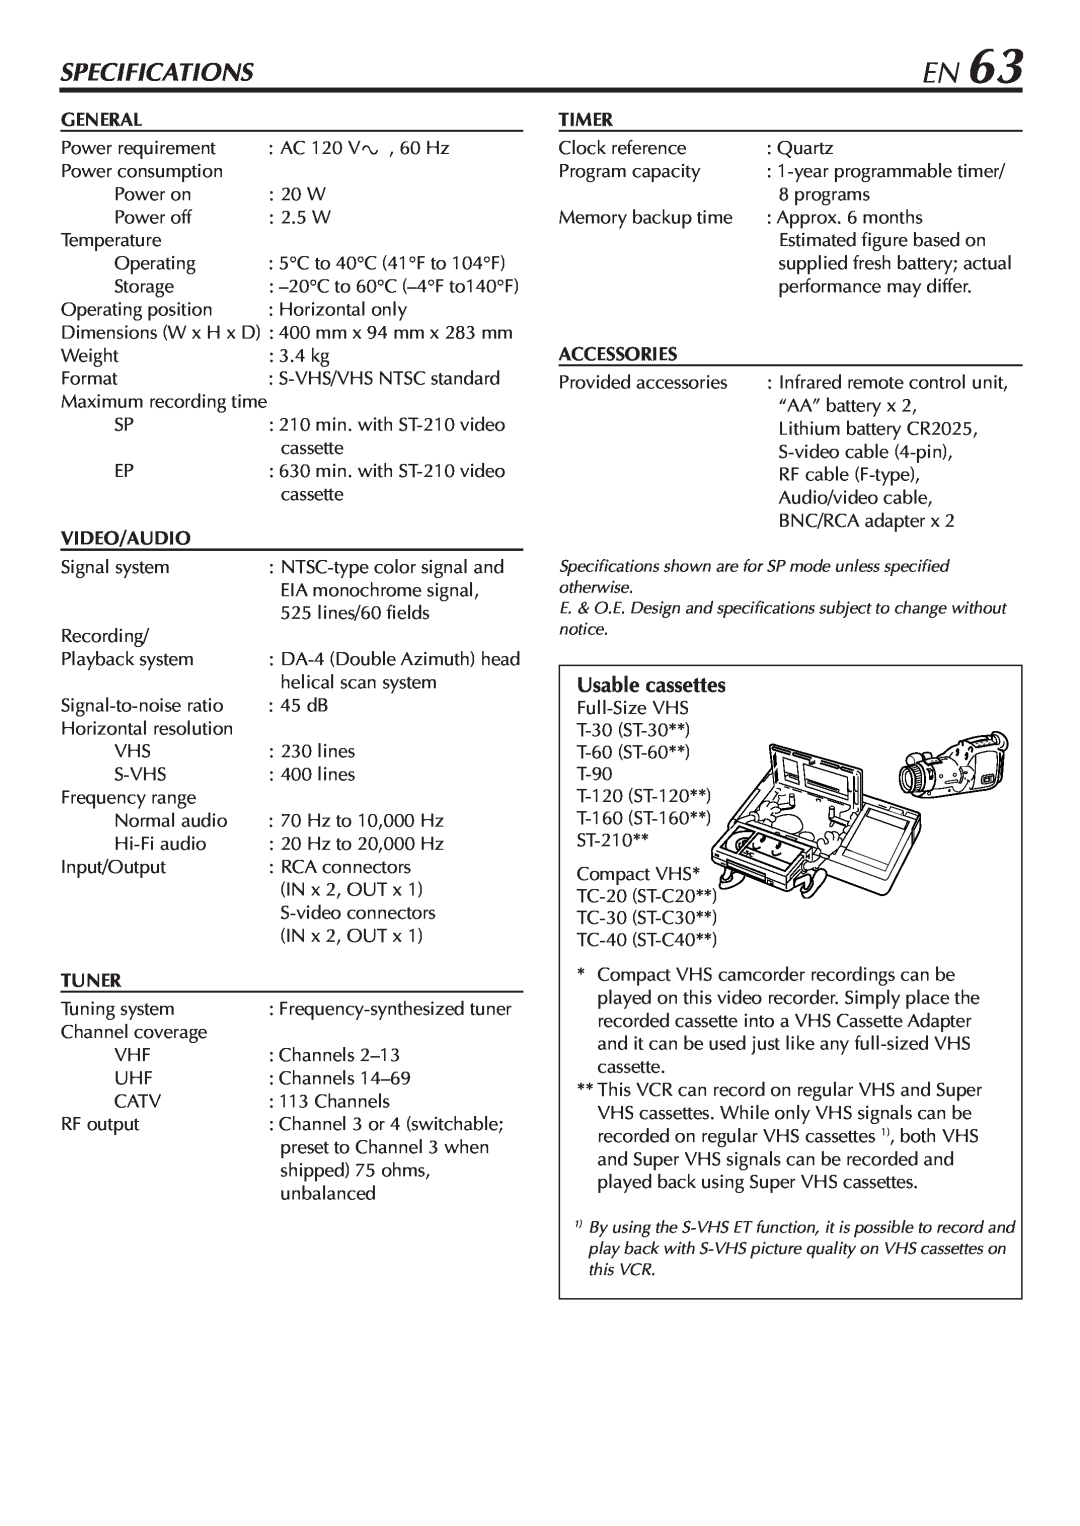 JVC SR-V10U manual Specifications, Usable cassettes 